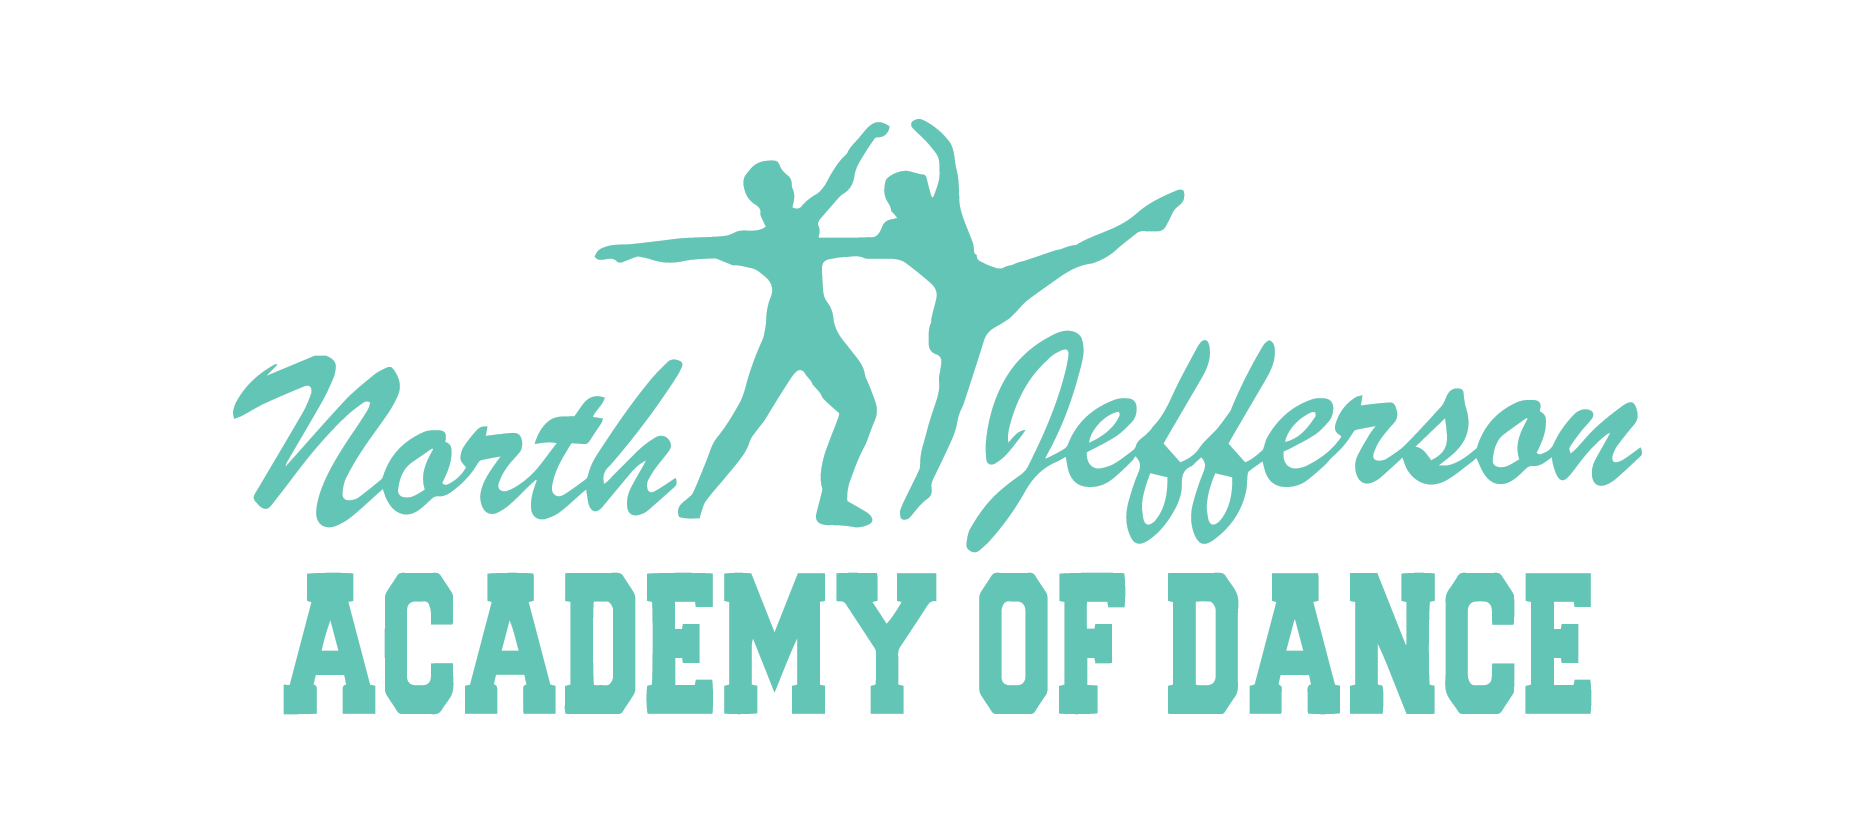 North Jefferson Academy of Dance